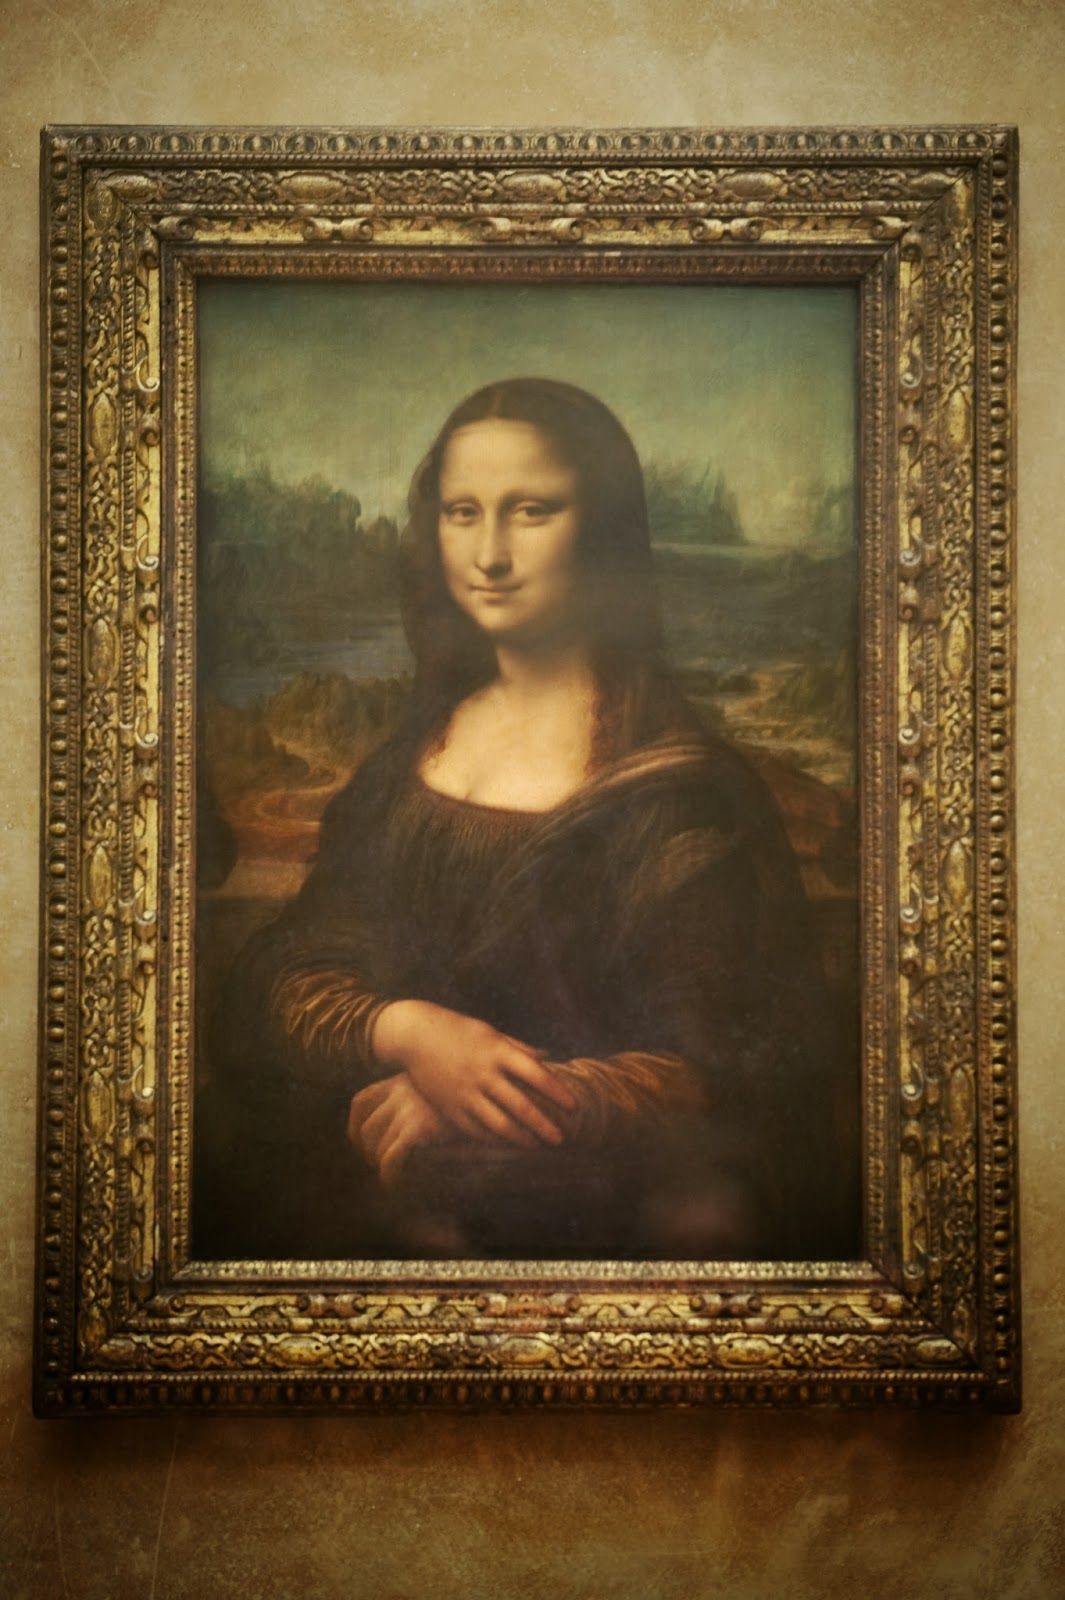 A painting of mona lisa is displayed on the wall - Mona Lisa